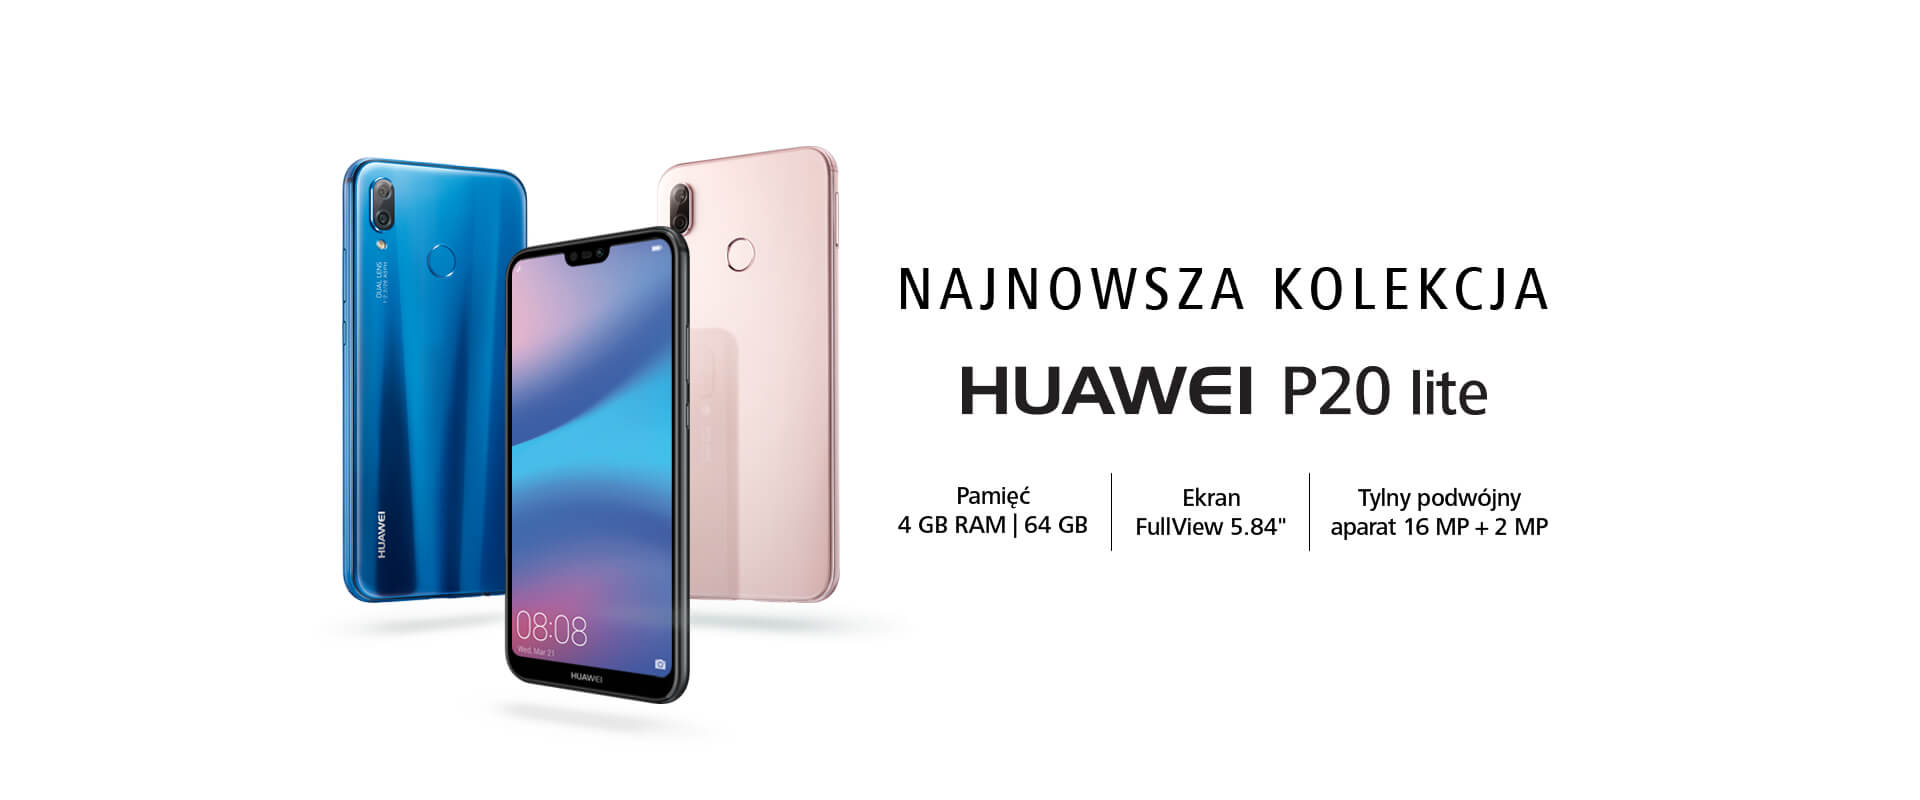 Huawei p20 lite 2017 specs